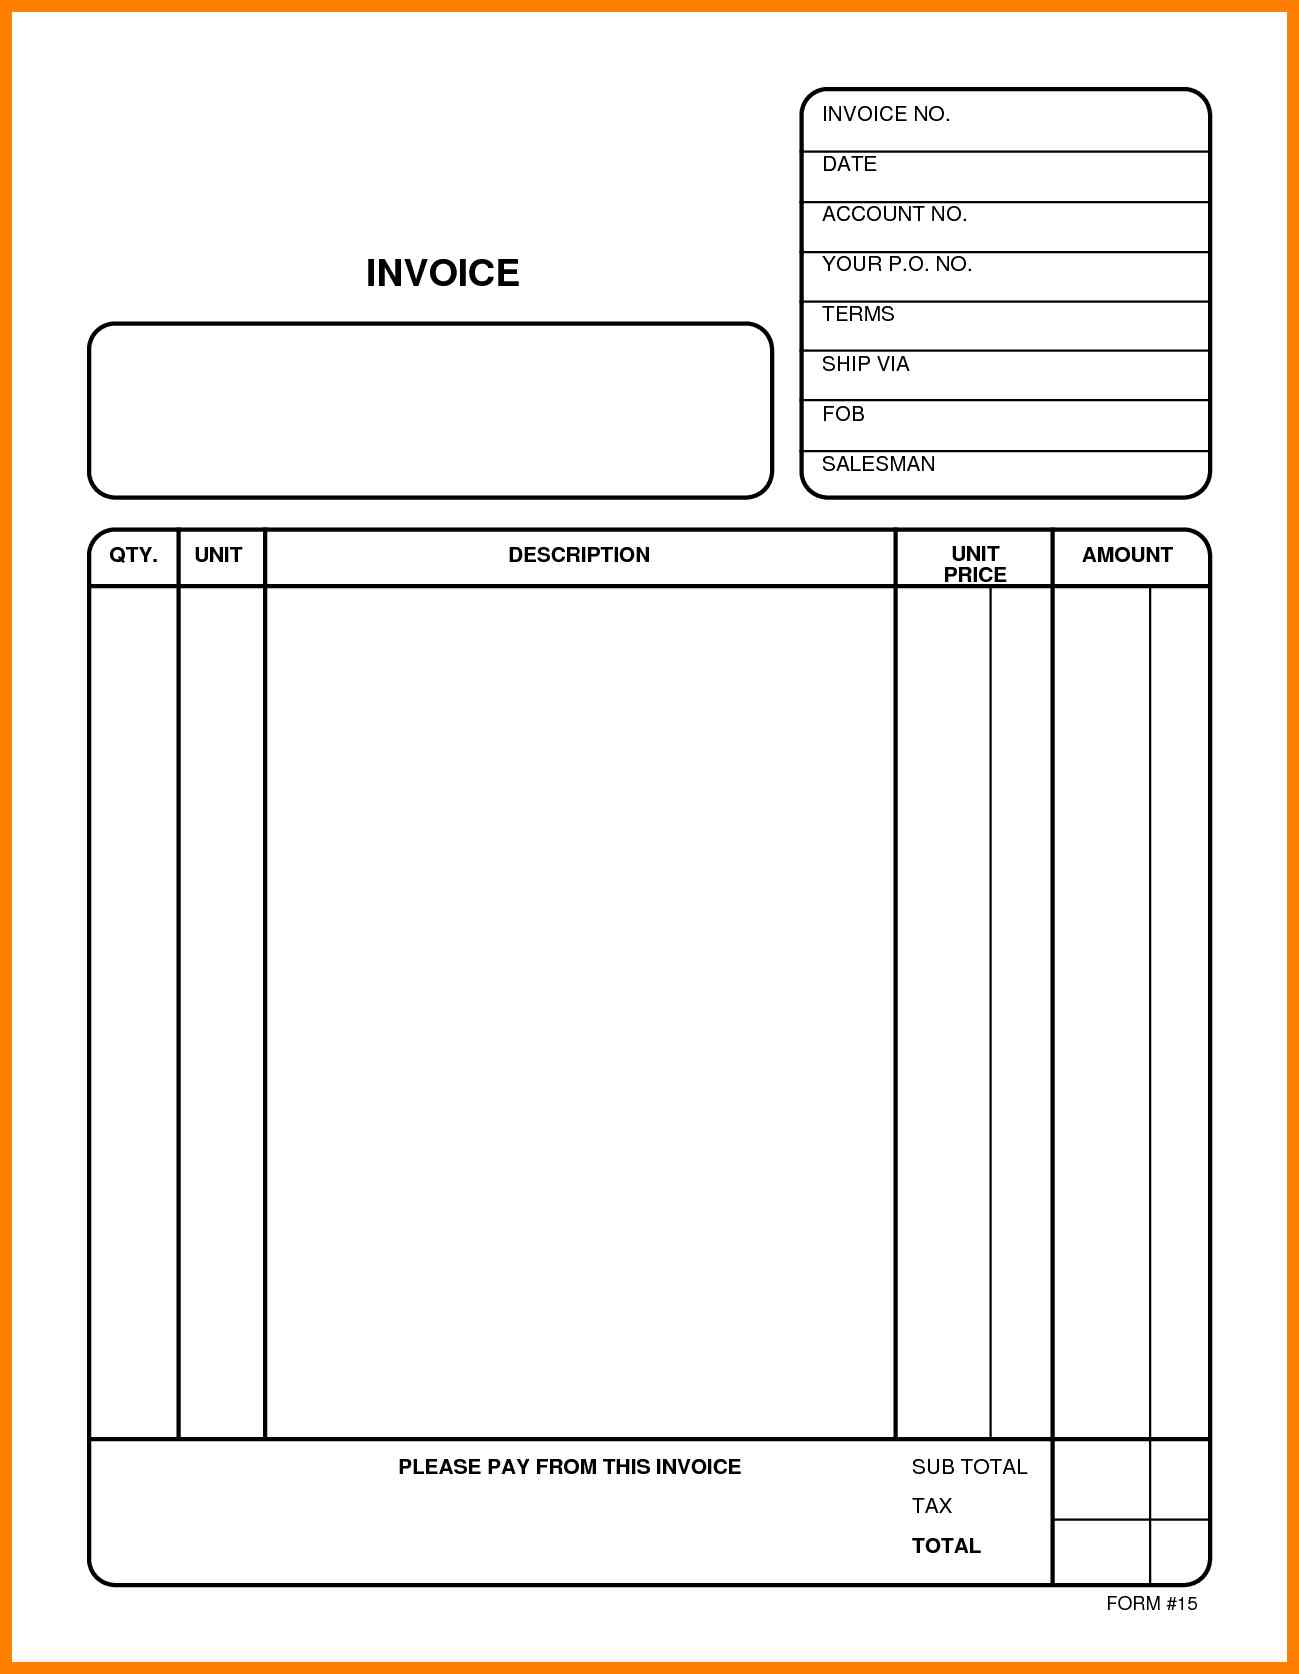 Free Printable PDF Sales Receipts Business Form Templates